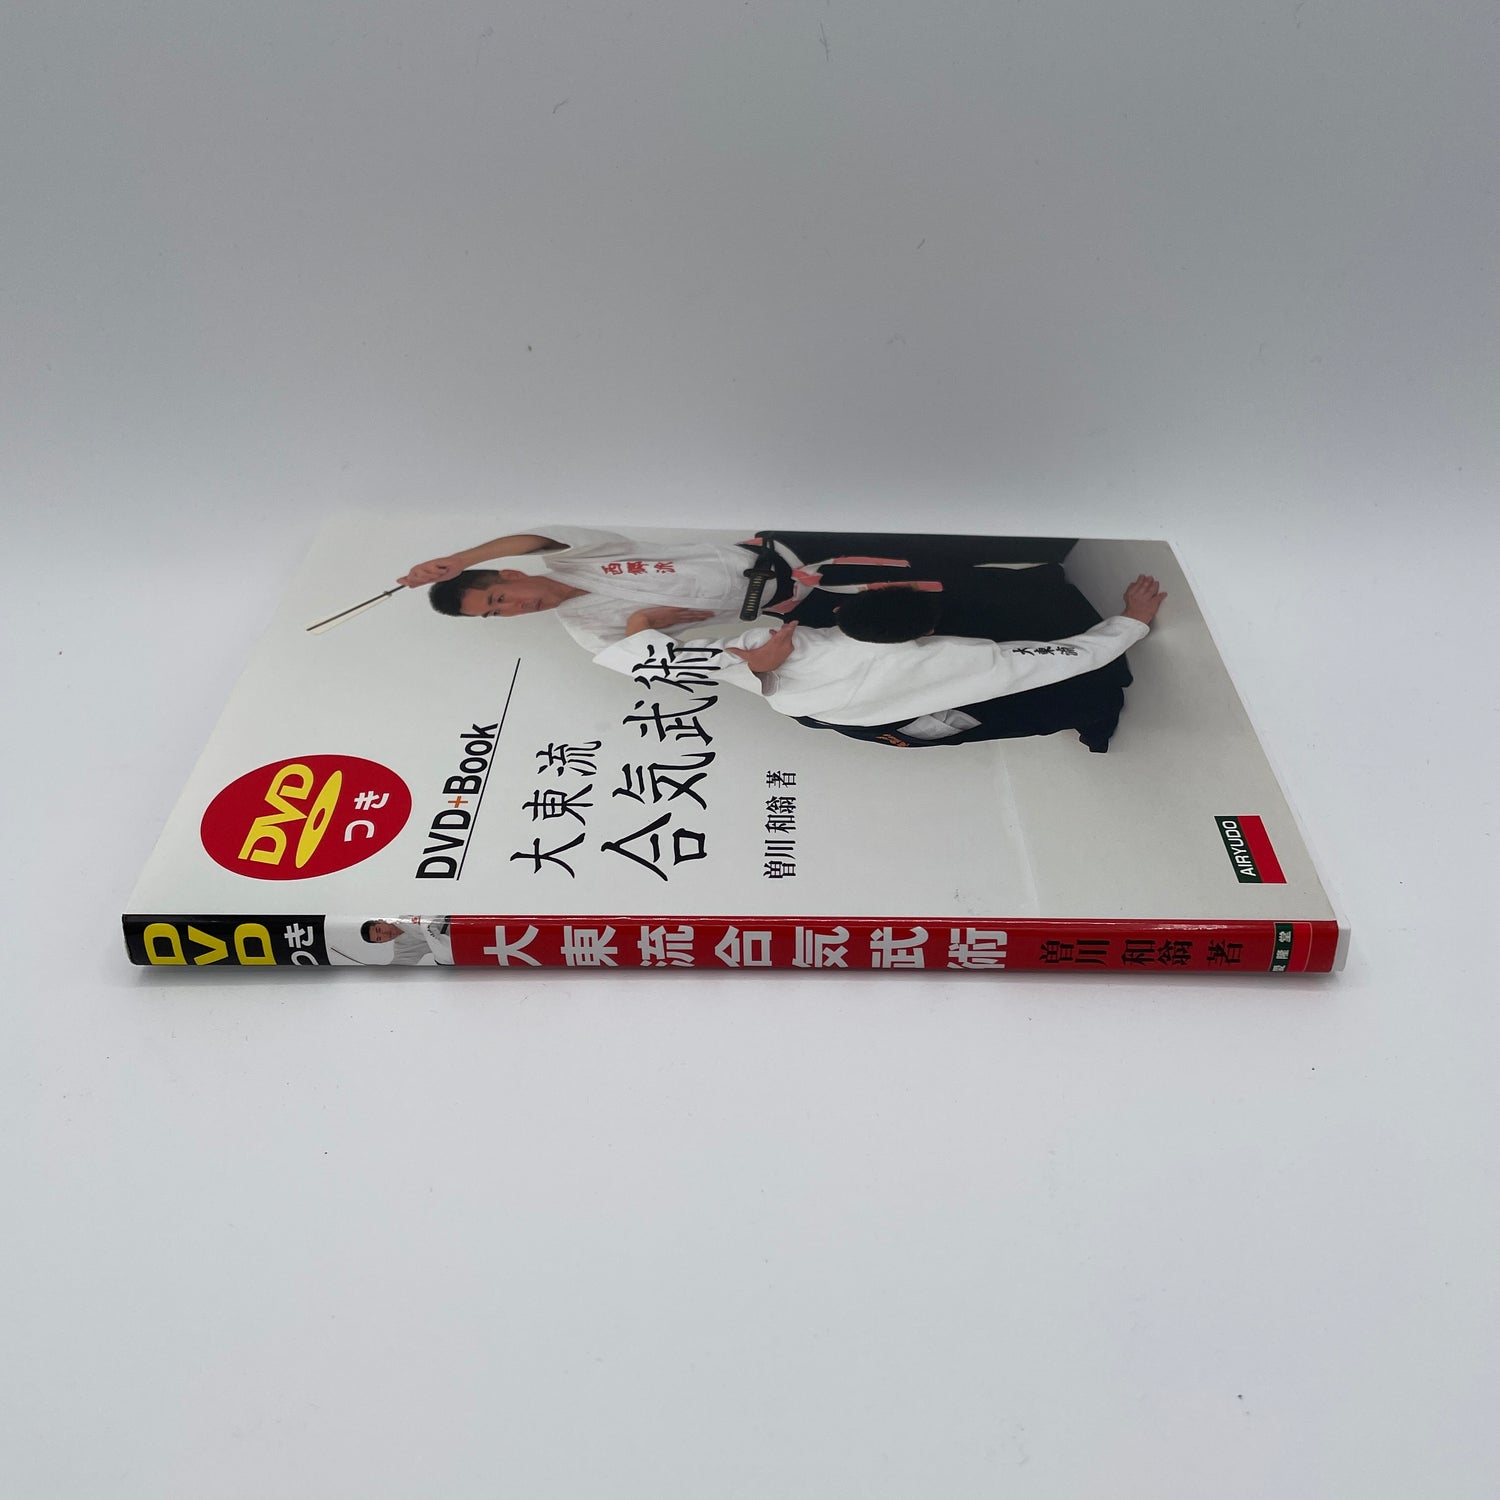 Daito Ryu Aikibujutsu Book & DVD by Kazuoki Sogawa